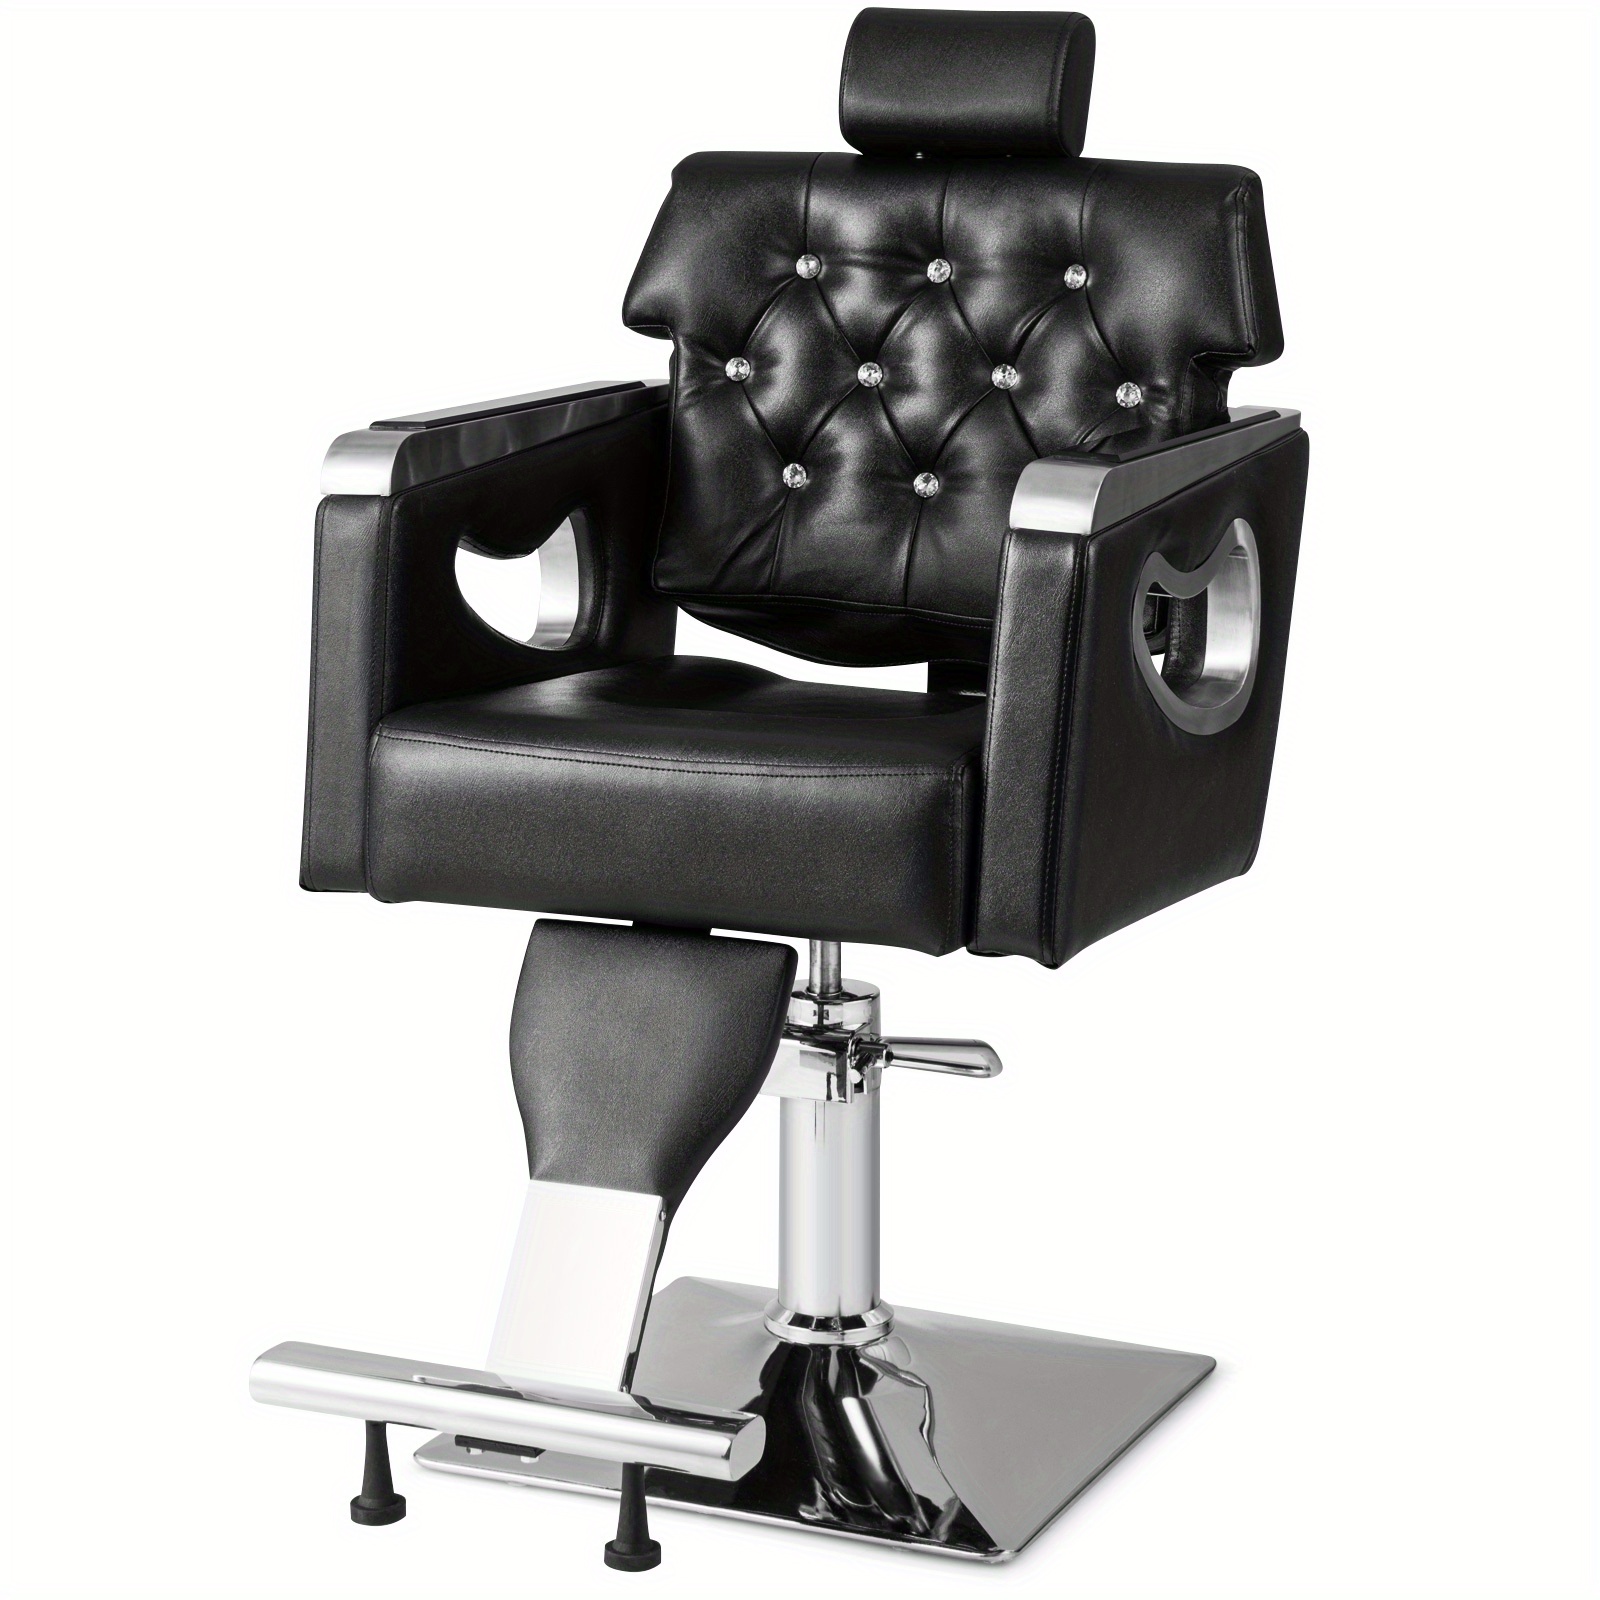 

Lifezeal Adjustable Barber Chair Heavy-duty Hydraulic Pump Salon Chair 360° Rotation